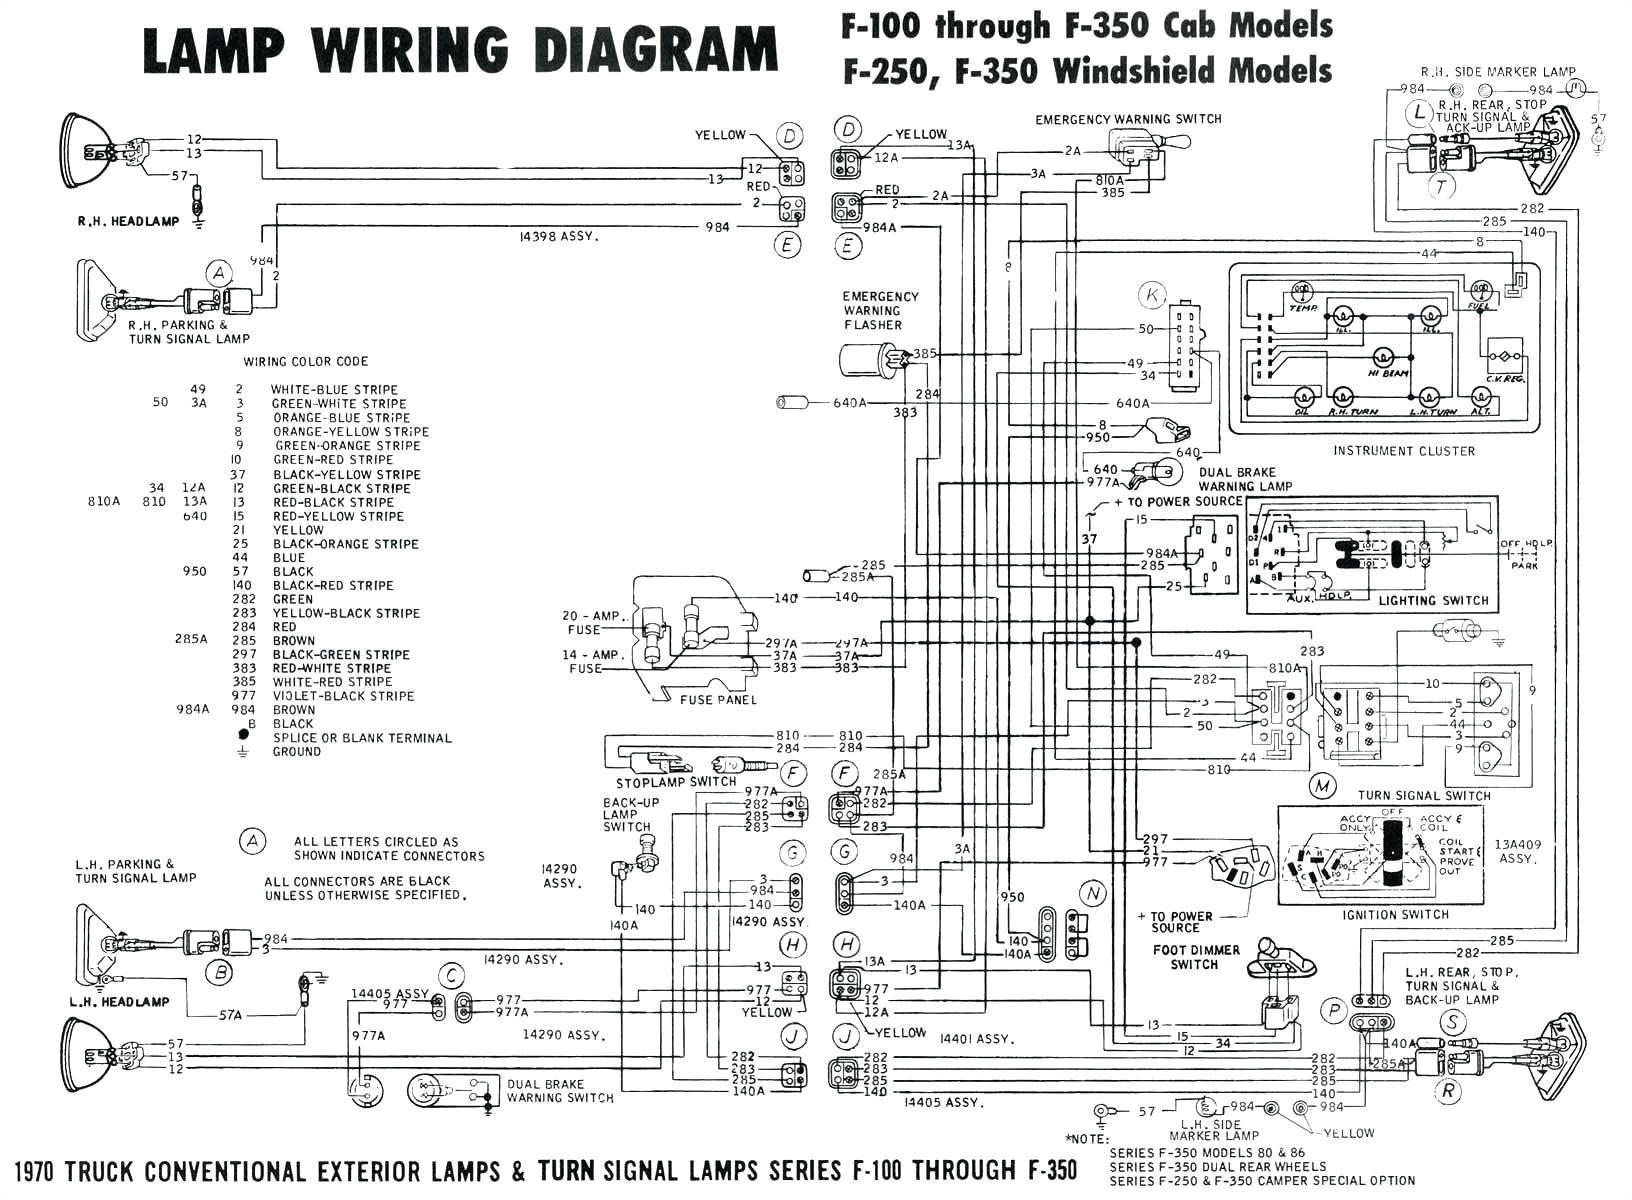 2001 honda civic wiring diagram inspirational ignition switch wiring diagram honda civic best obd0 alternator of 2001 honda civic wiring diagram jpg